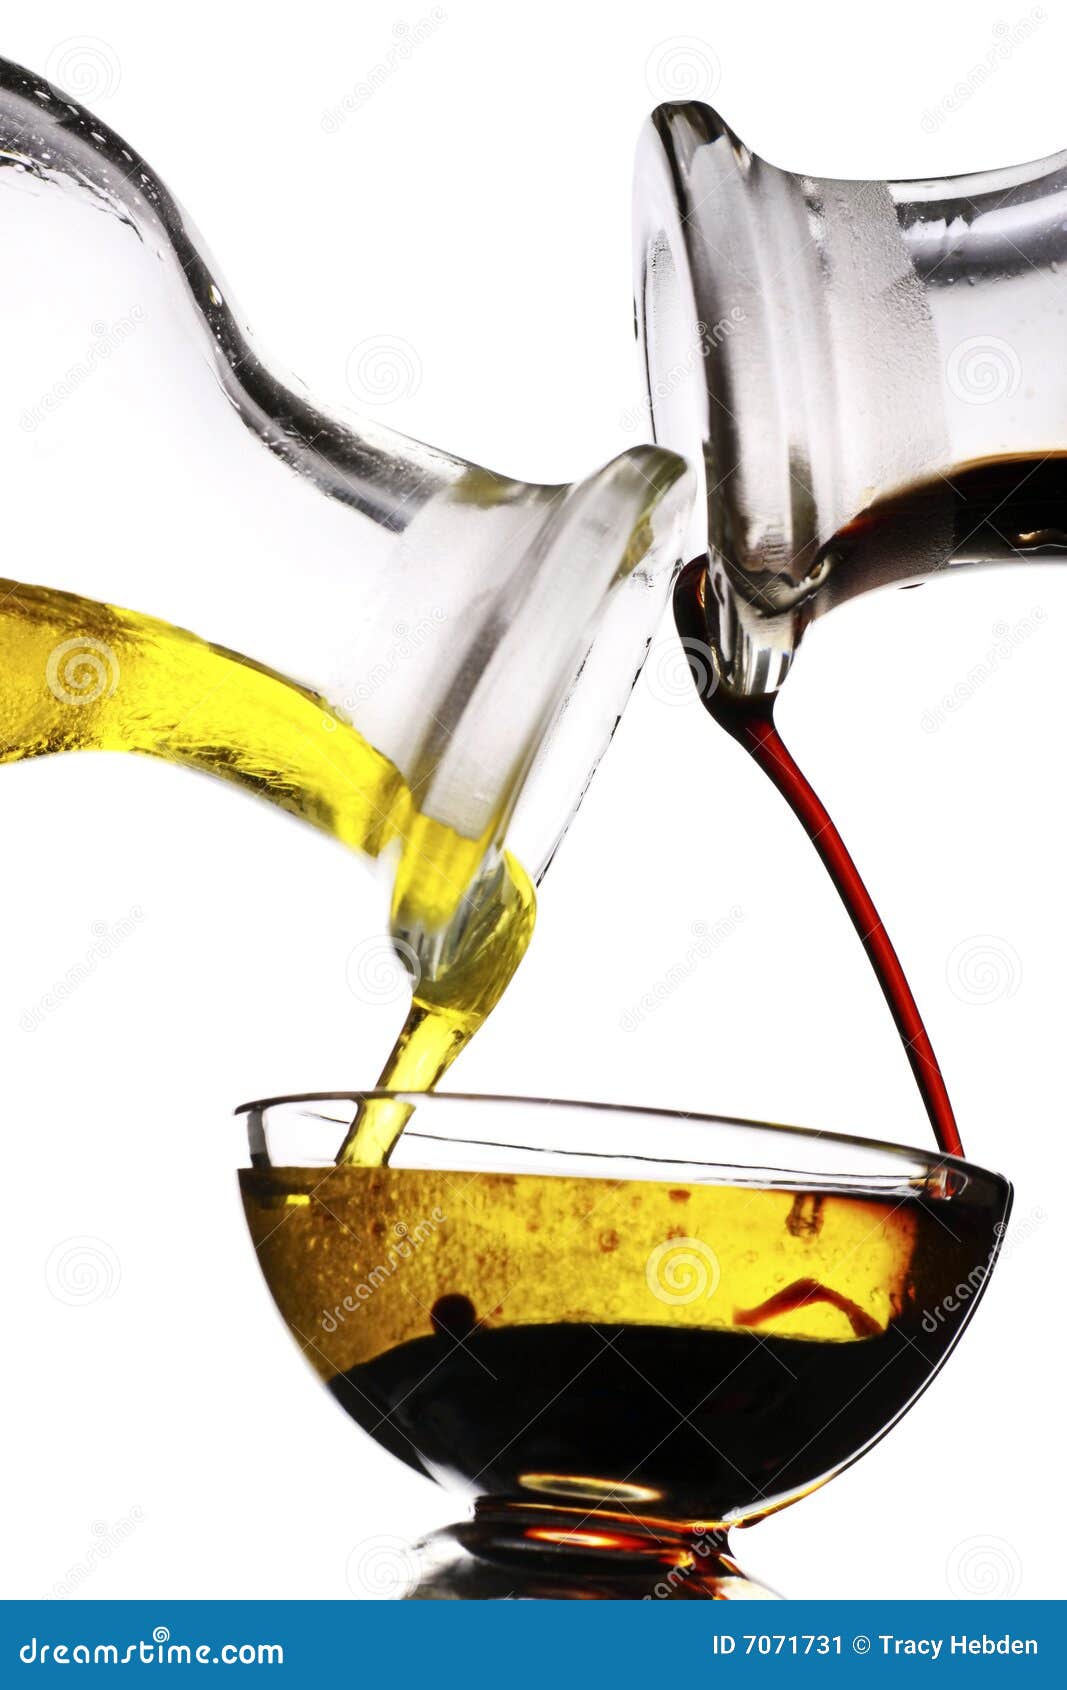 balsamic vinegar and olive oil